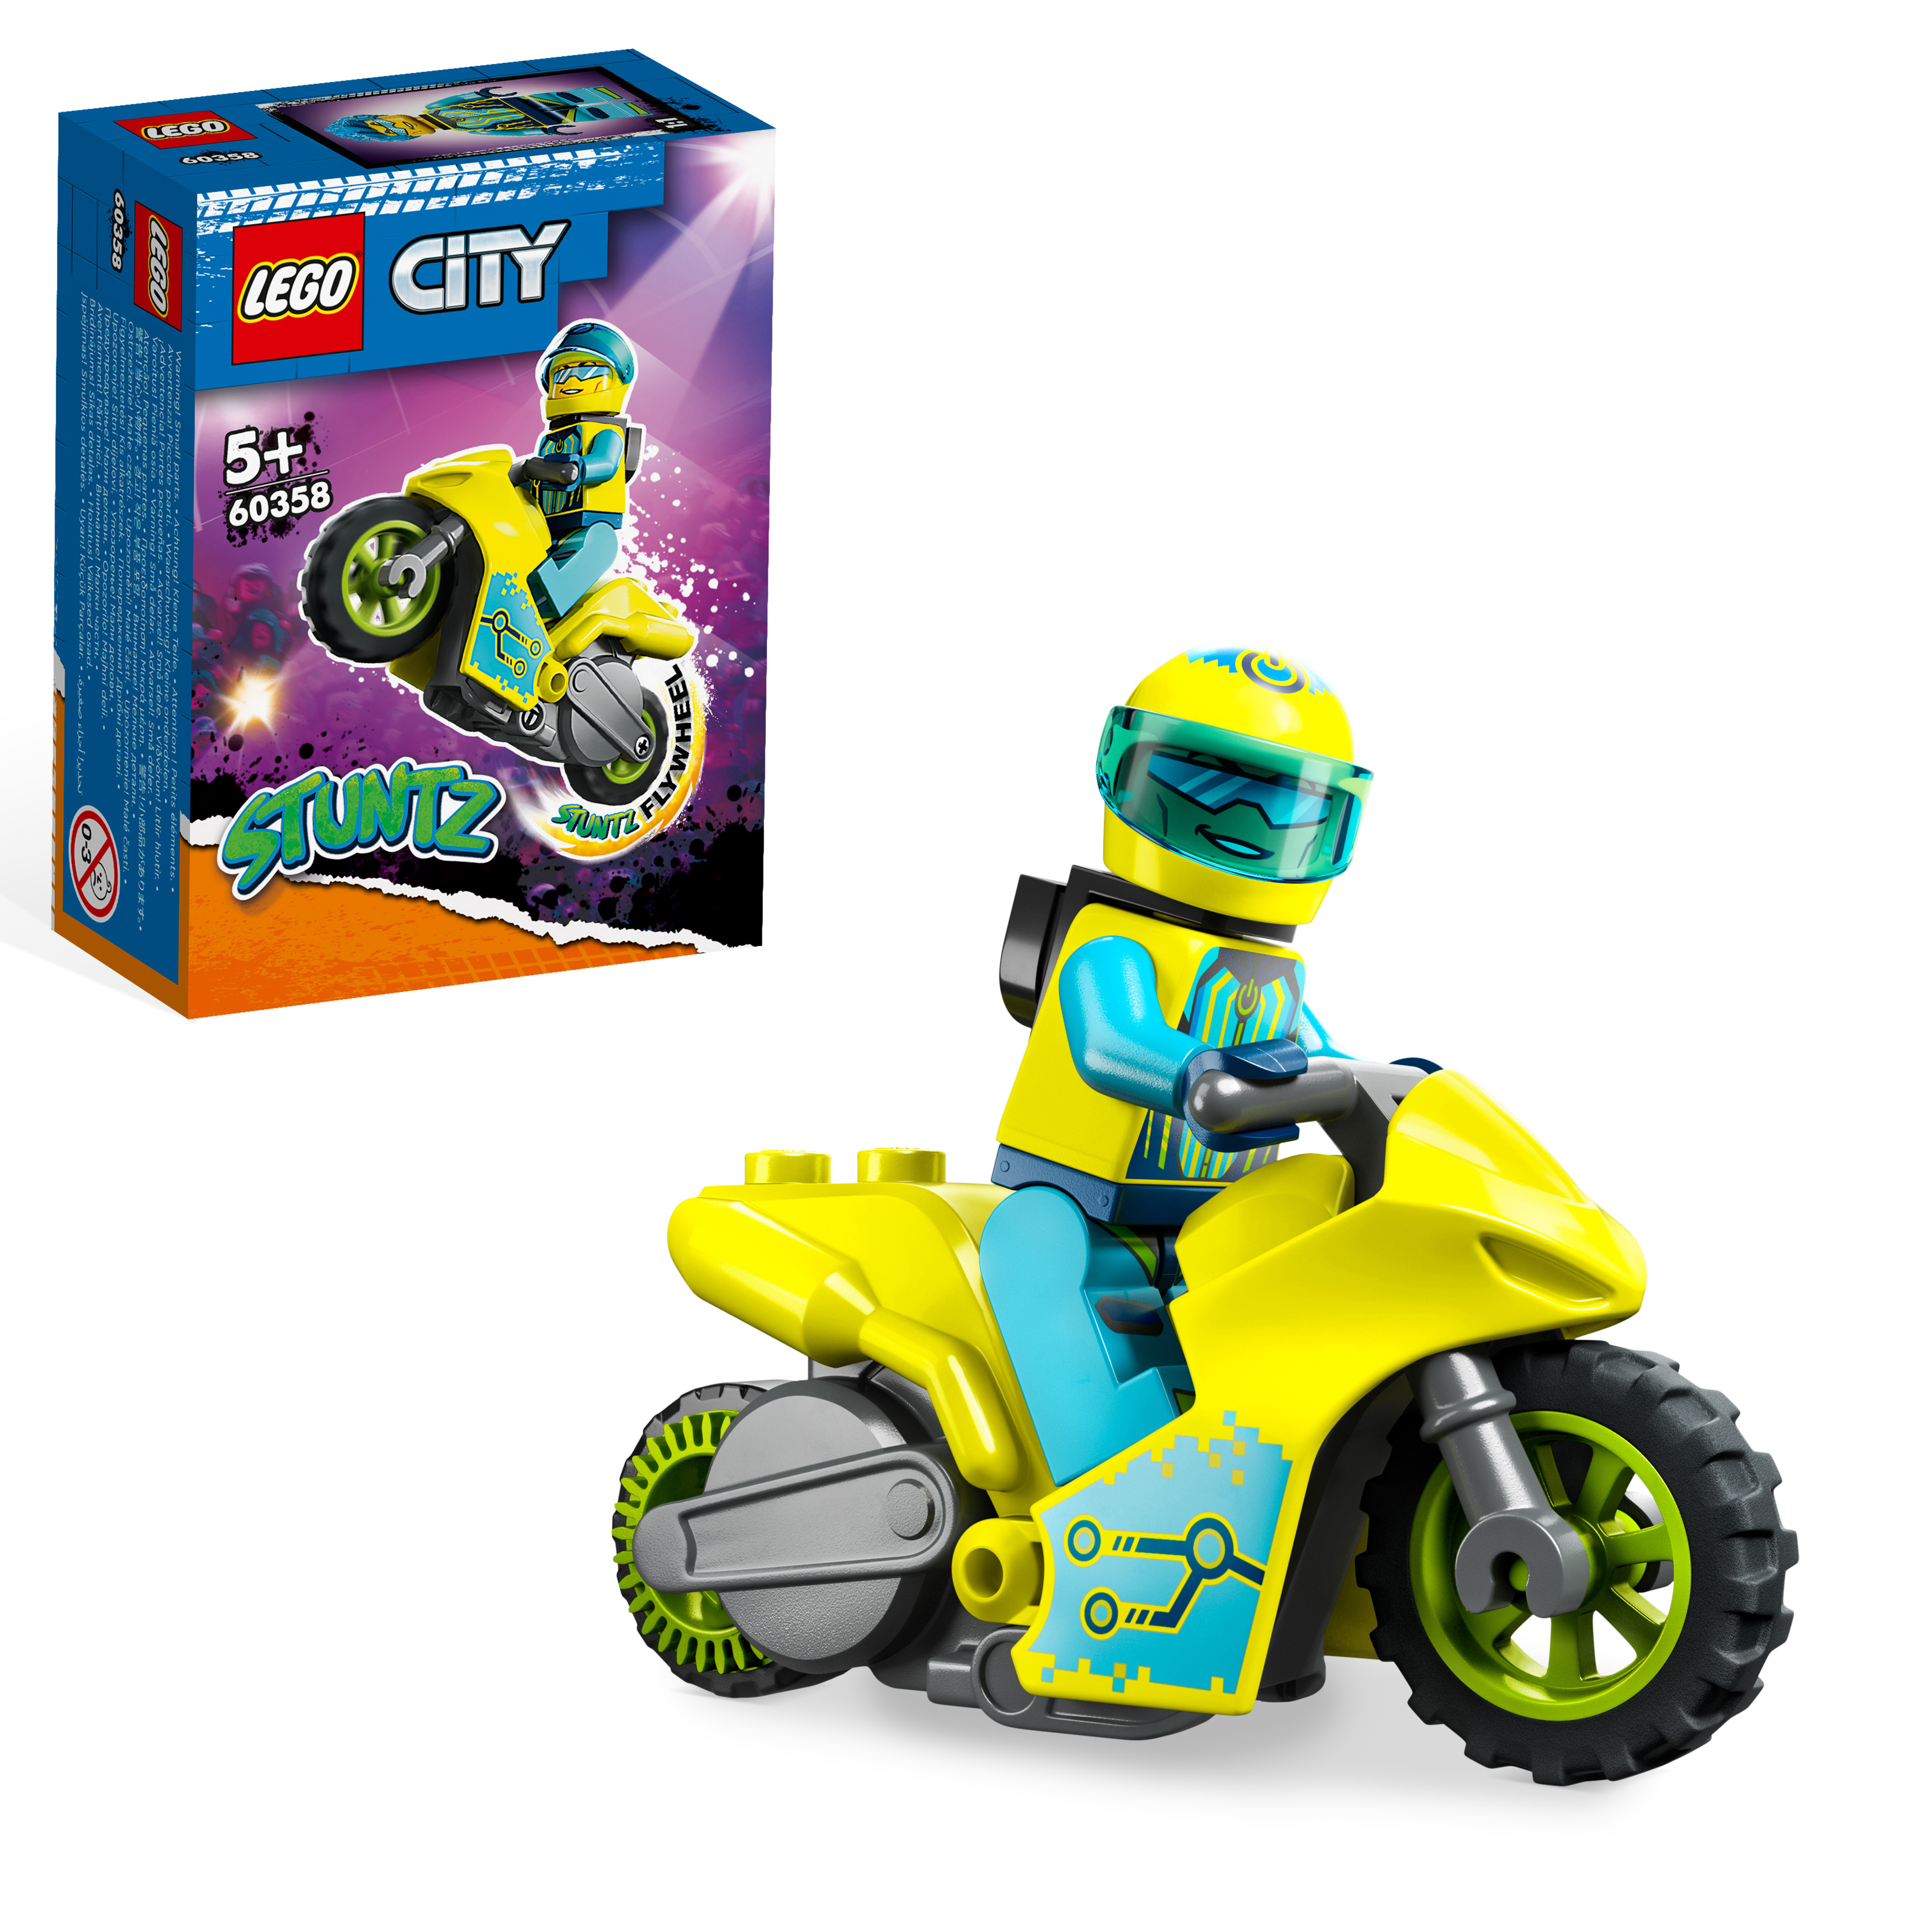 LEGO City 60358 Cyber-Stuntbike Mehrfarbig Bausatz